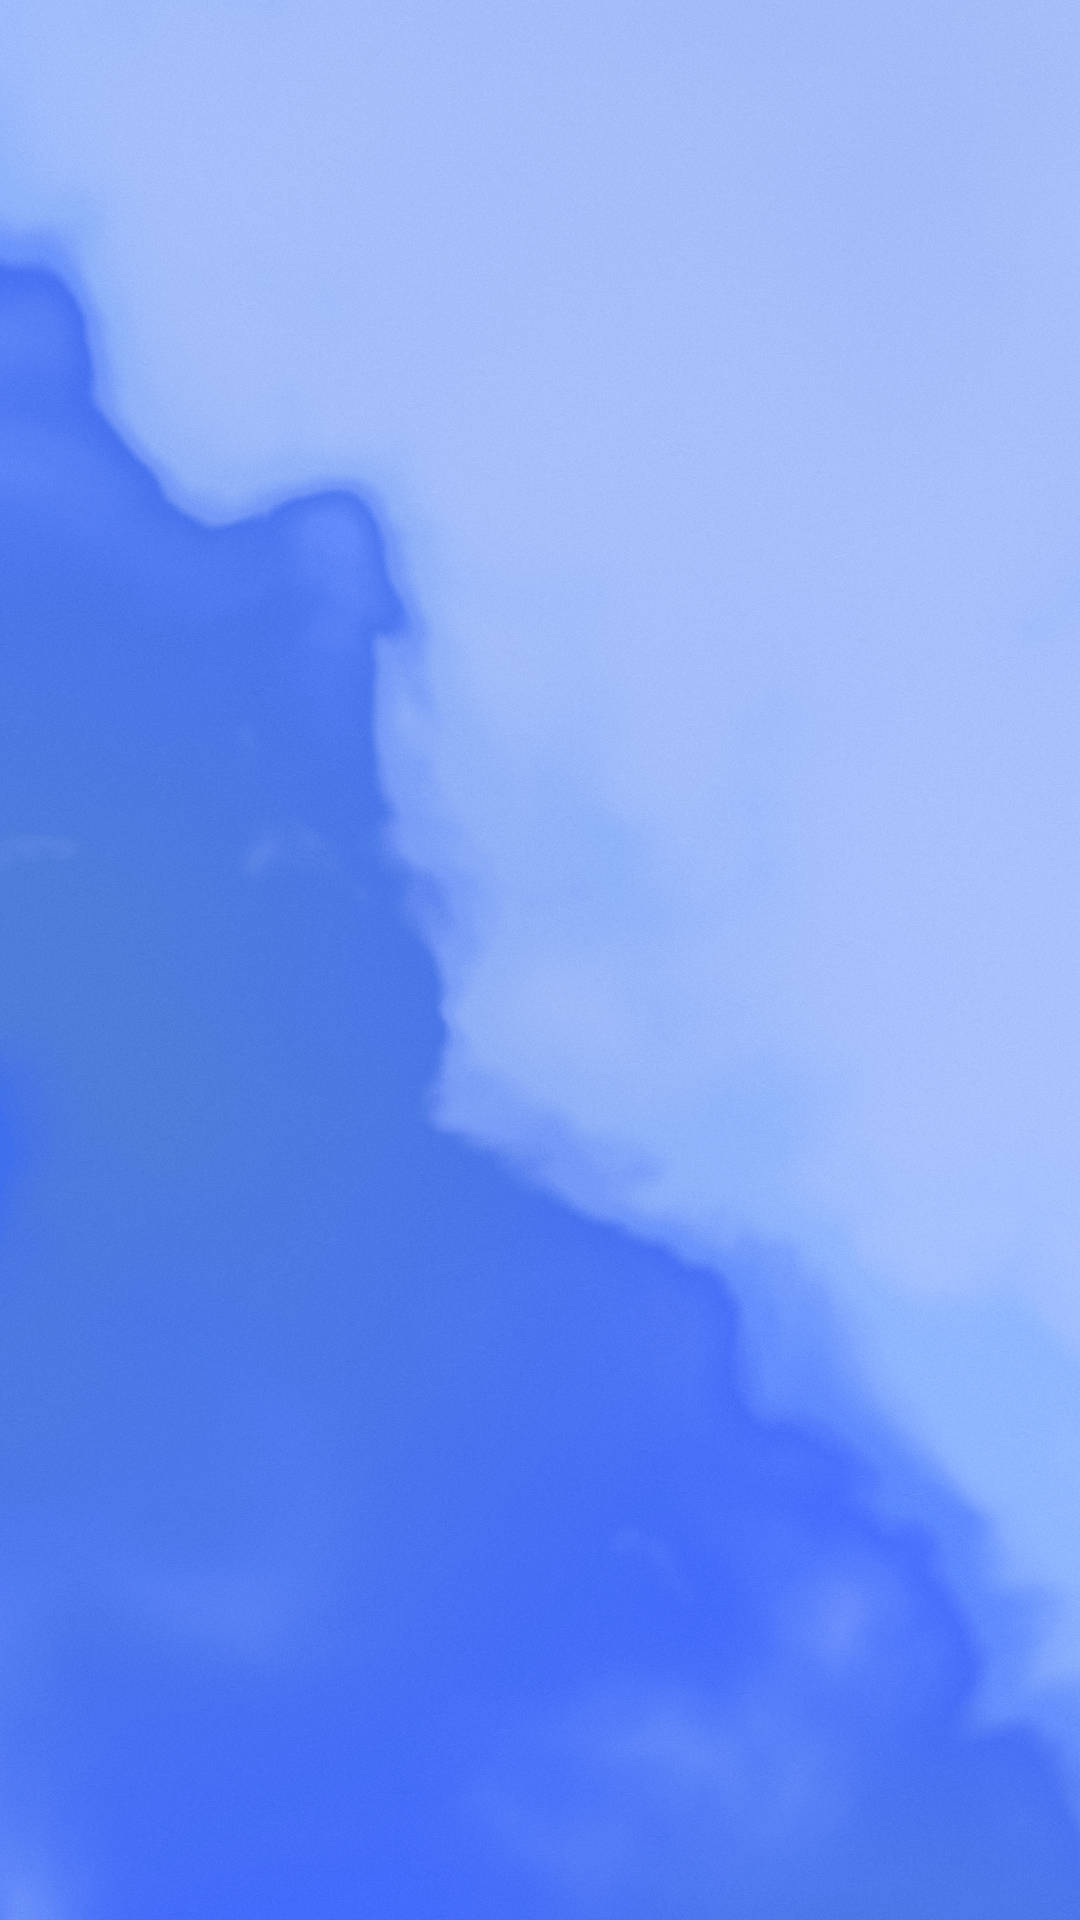 Pixel 3 Xl Blue Liquid Background